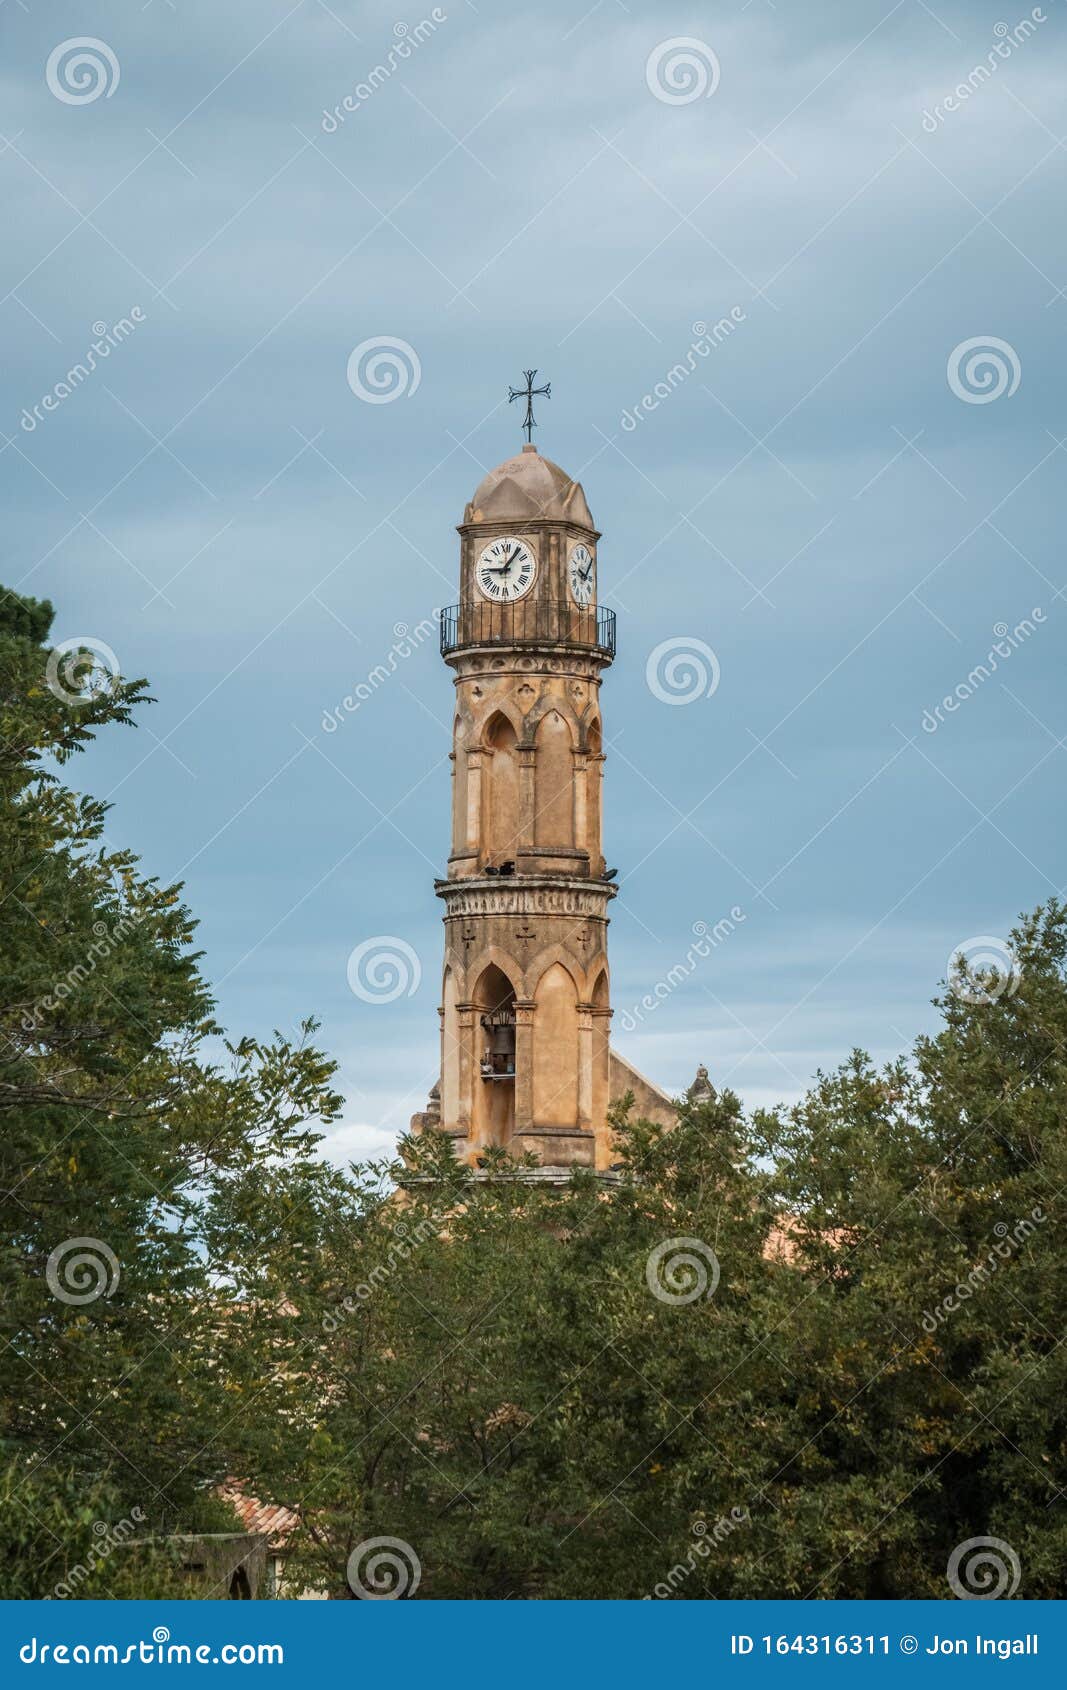 church clock tower at ville di paraso in corsica